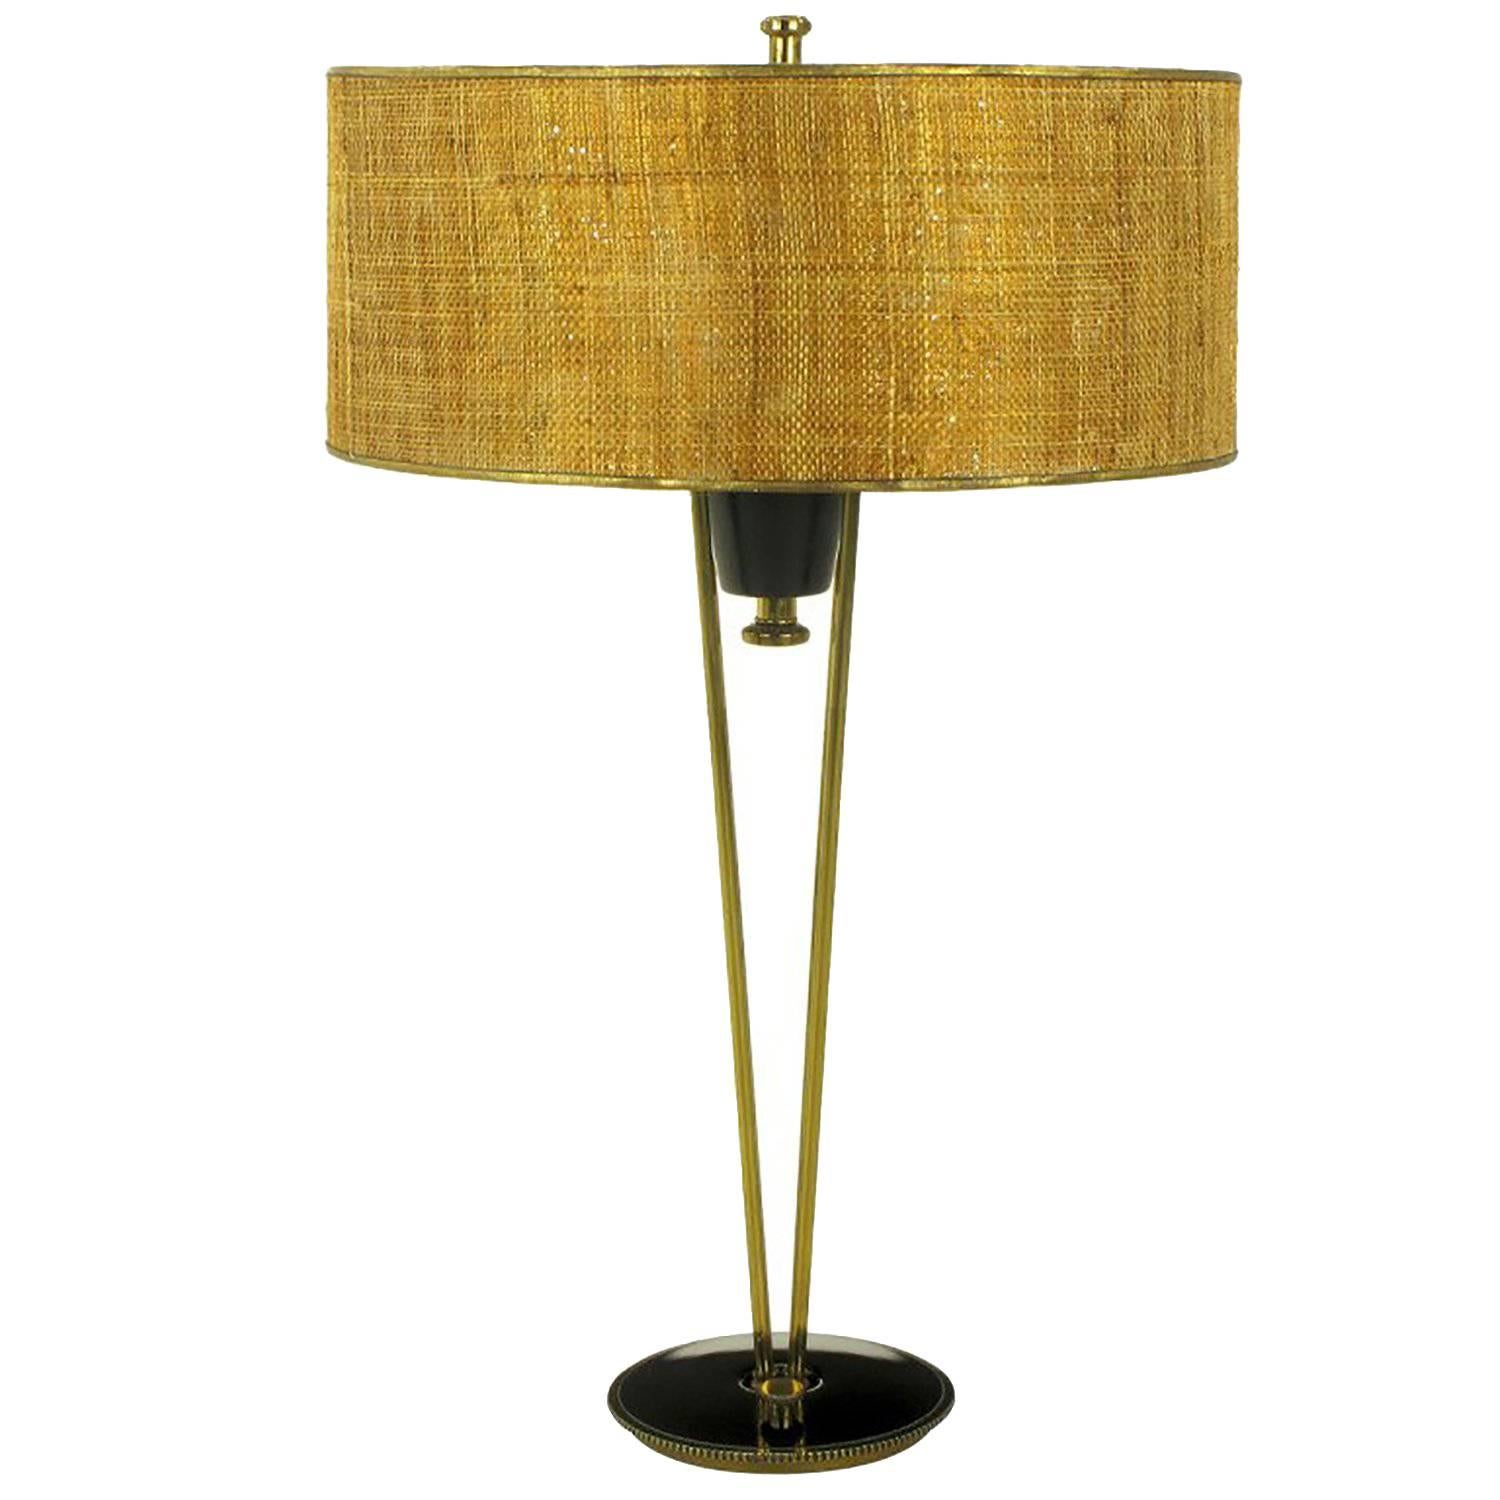 Rare 1950s Stiffel Black Lacquer and Brass Suspension Table Lamp For Sale